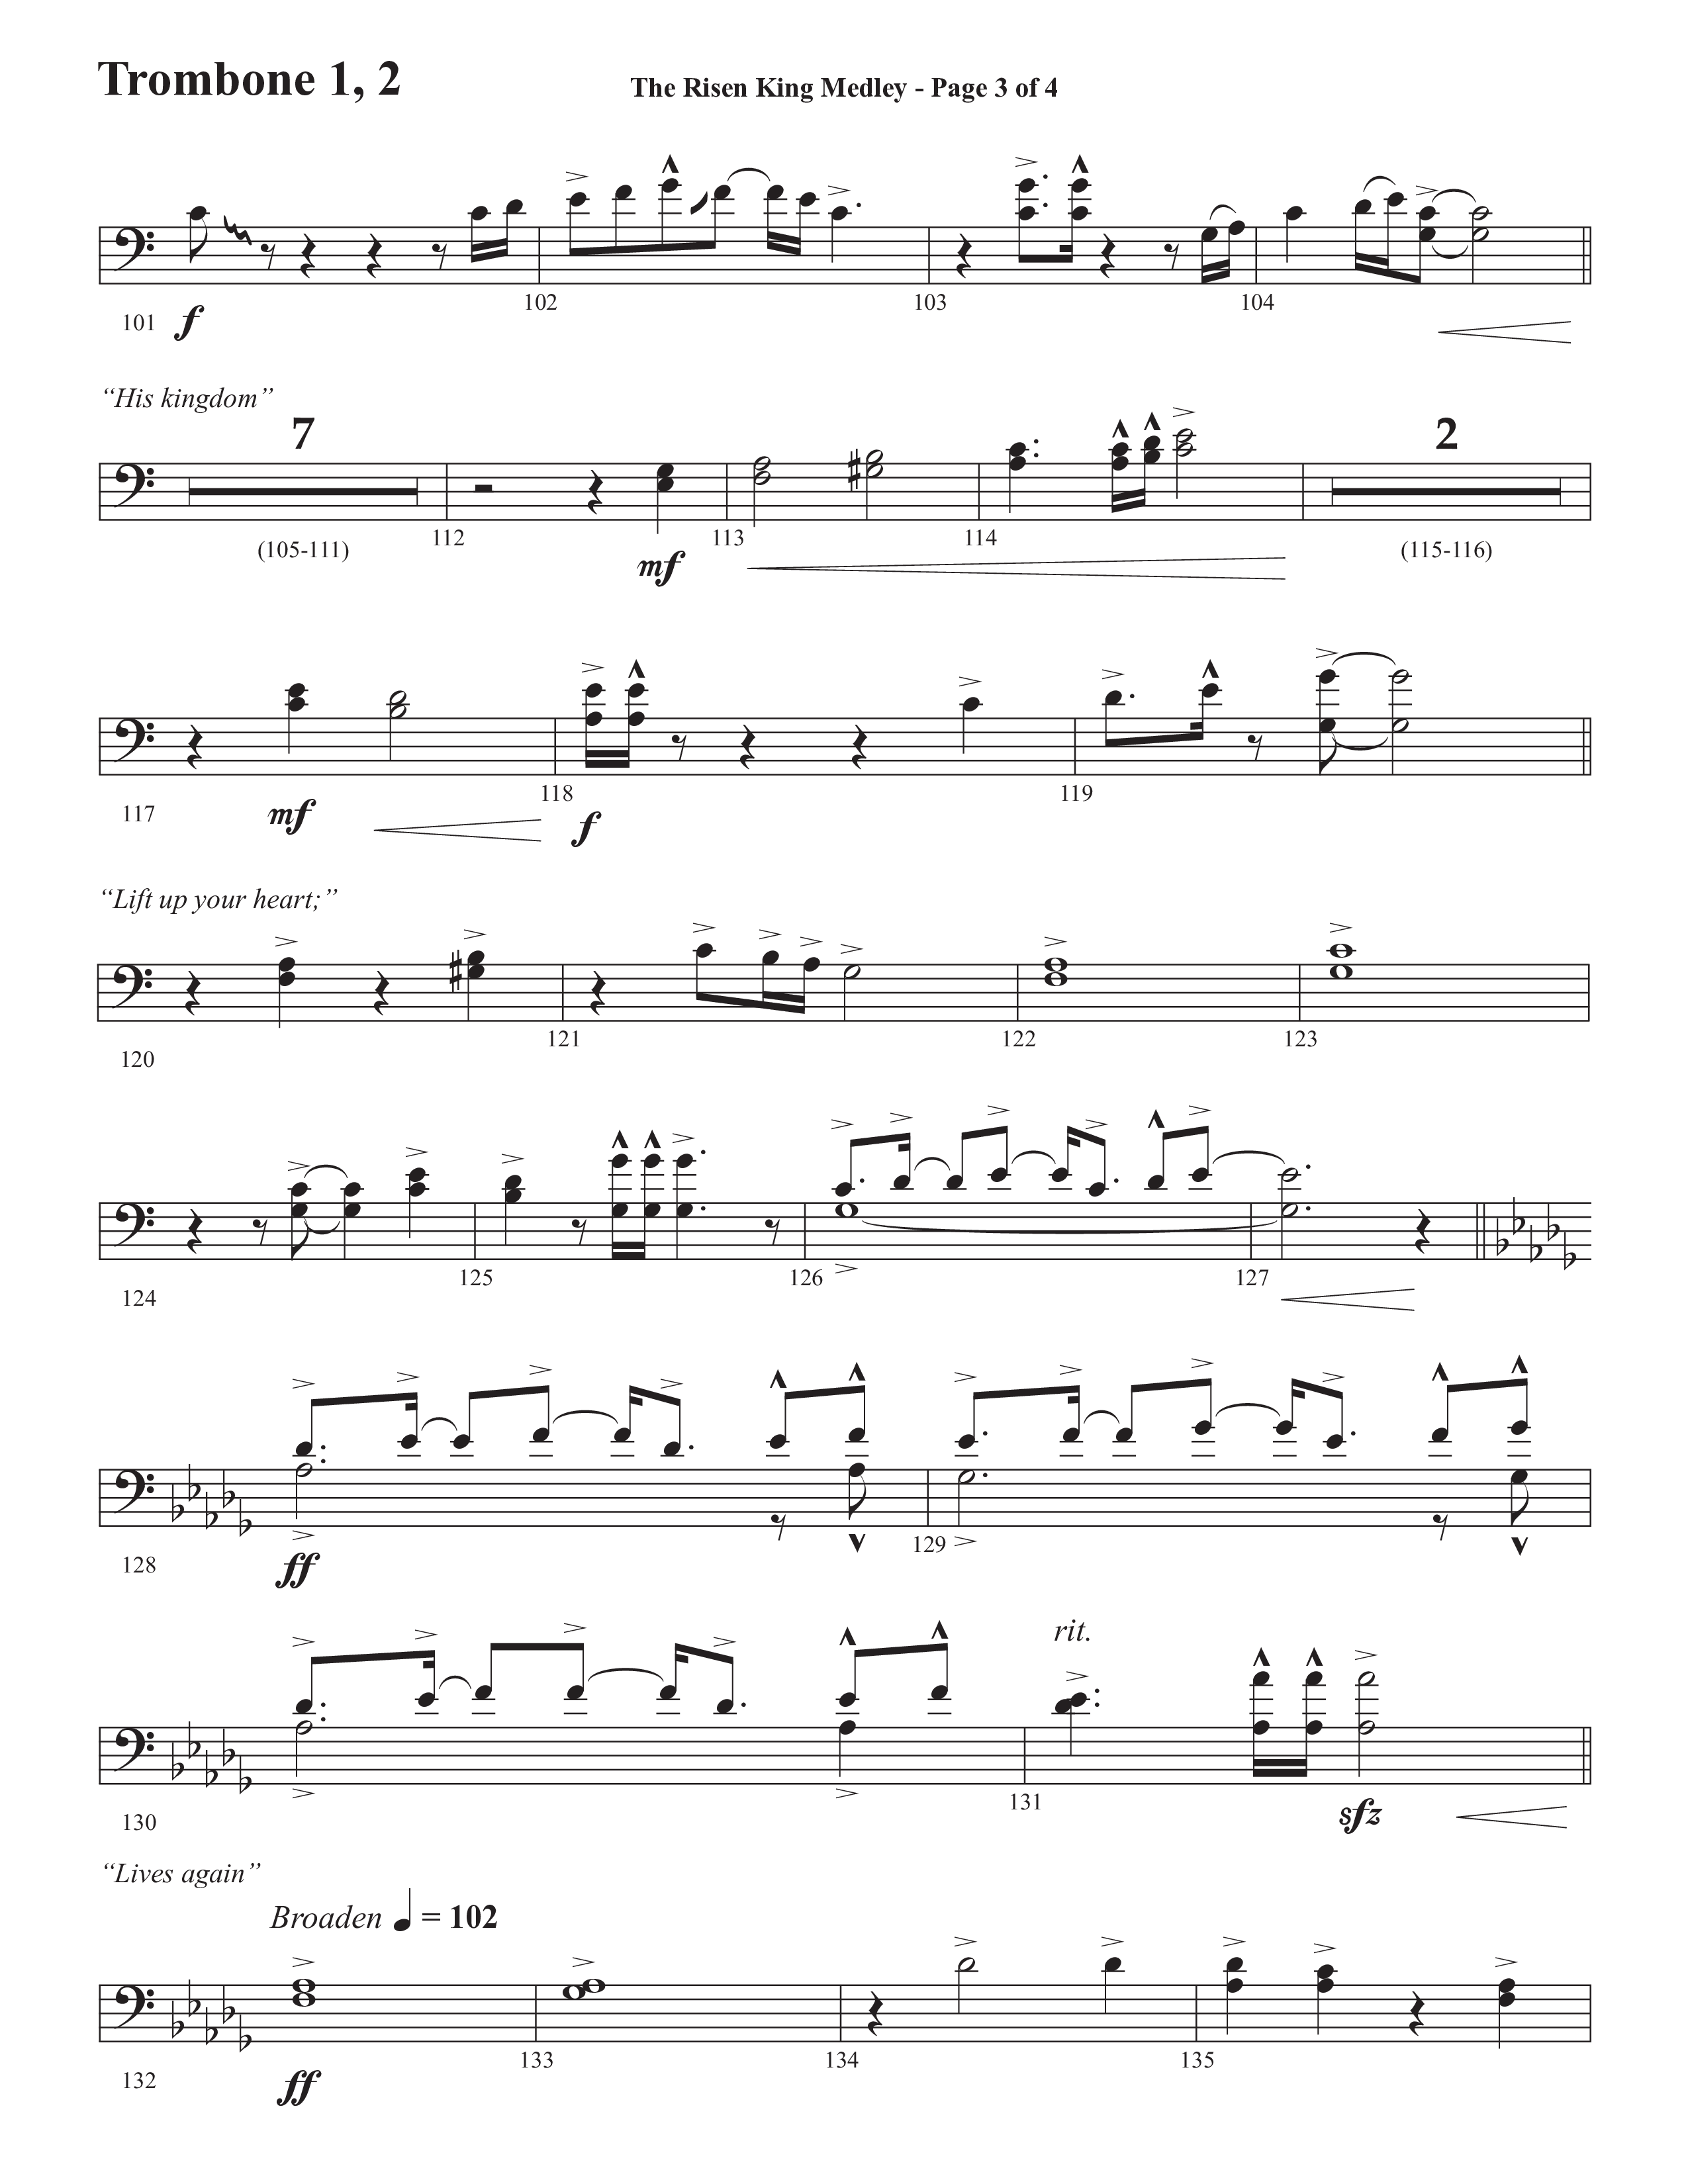 The Risen King Medley (Choral Anthem SATB) Trombone 1/2 (Semsen Music / Arr. John Bolin / Orch. Cliff Duren)